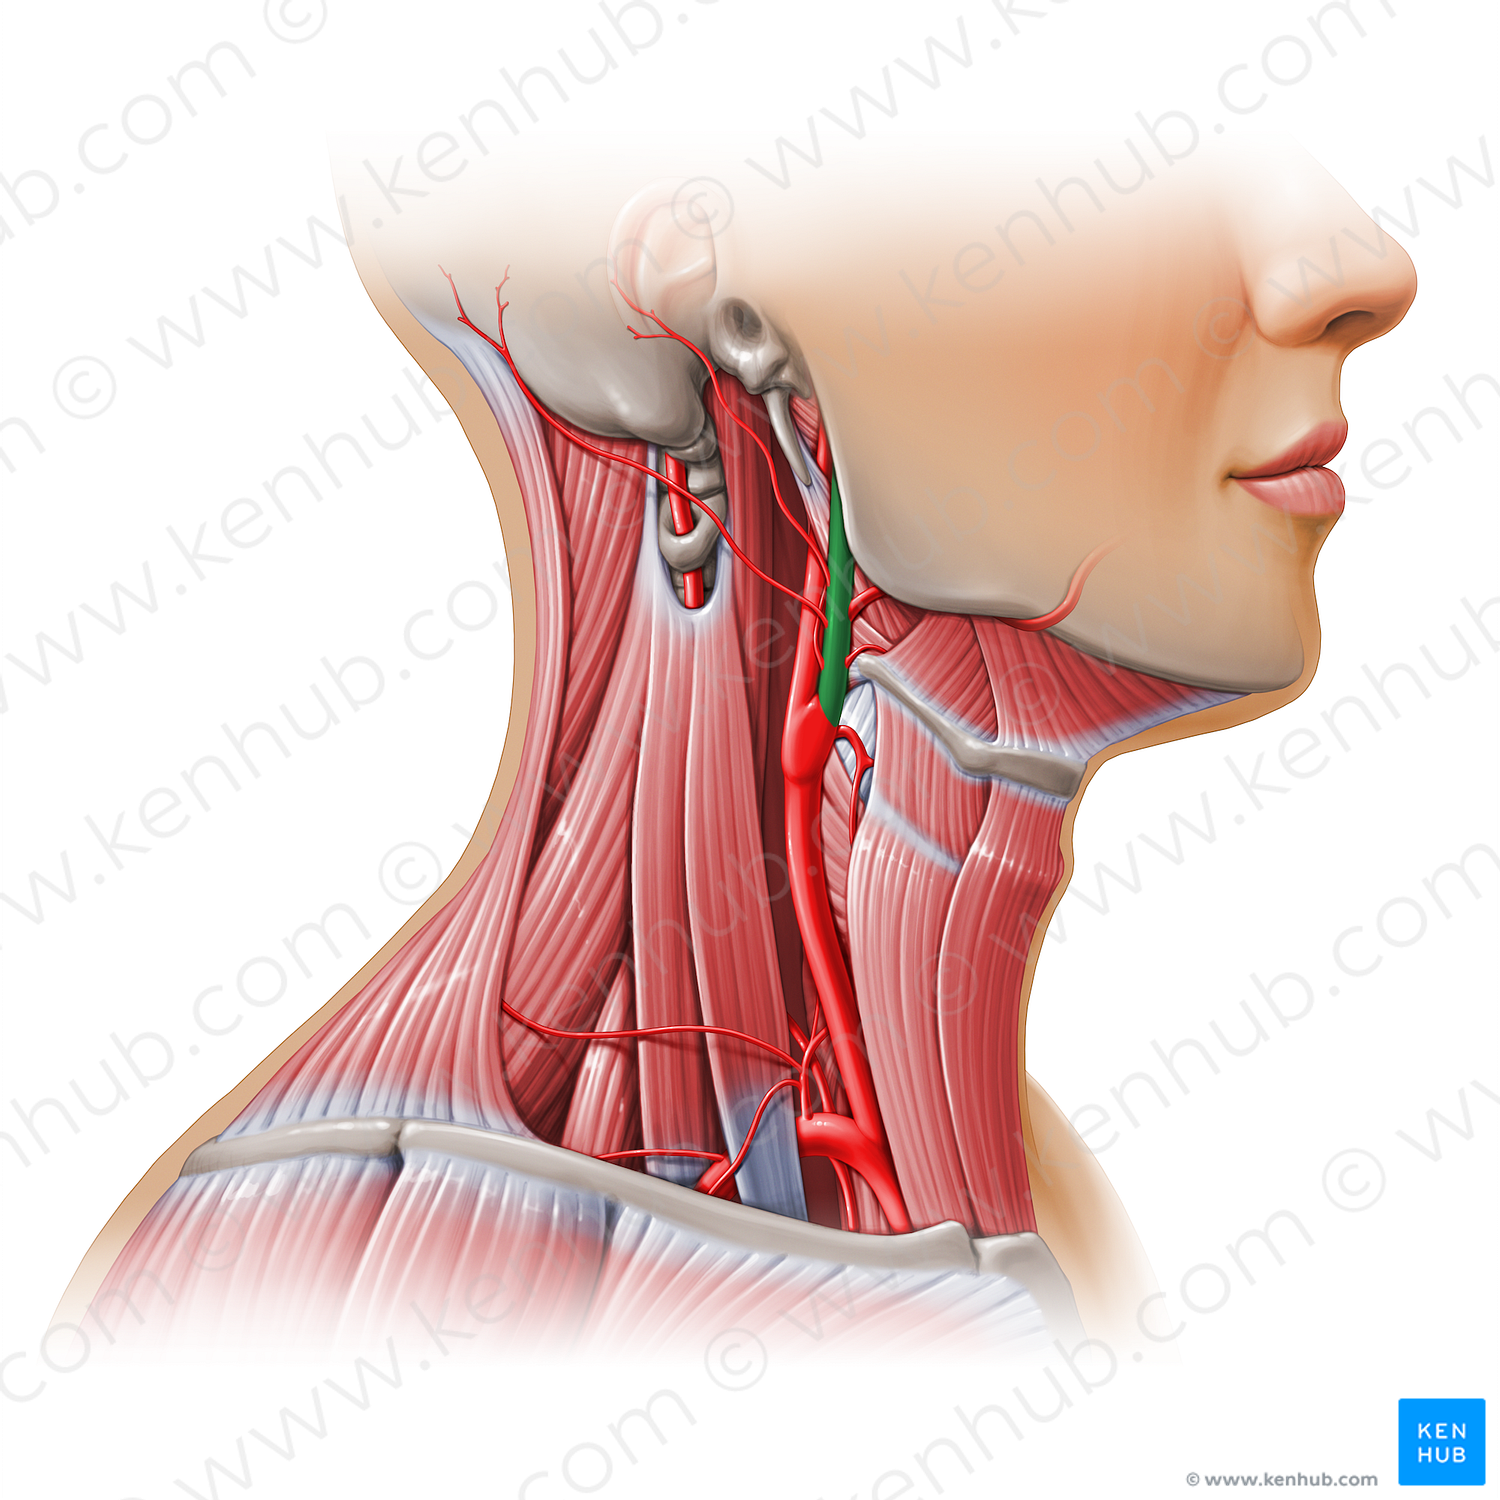 External carotid artery (#11133)